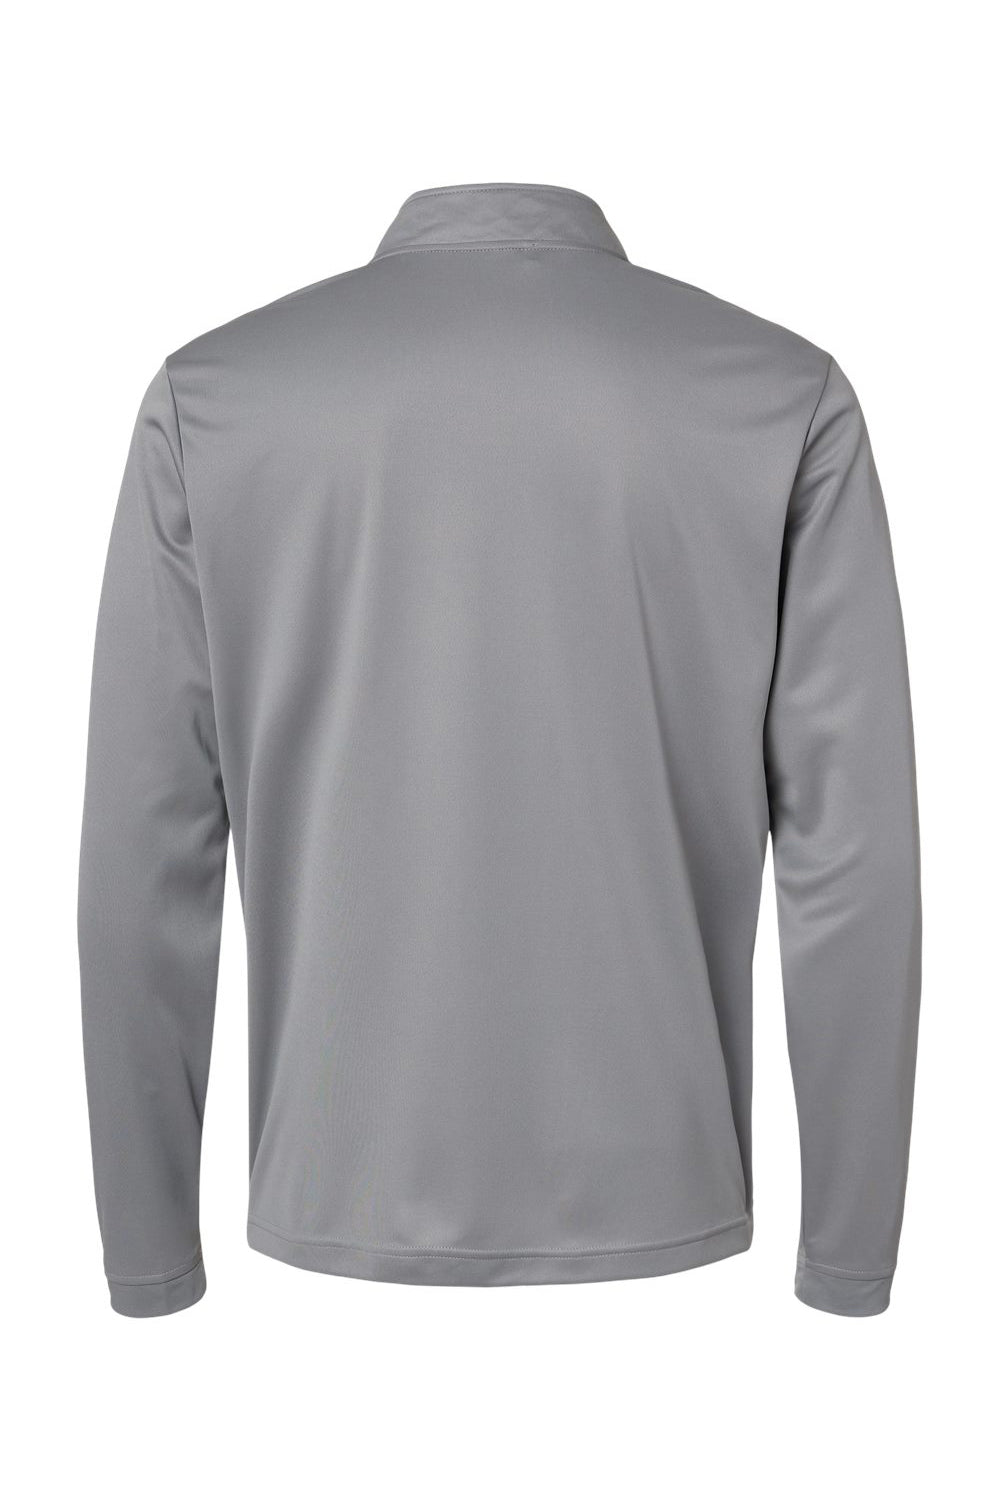 Adidas A401 Mens UPF 50+ 1/4 Zip Sweatshirt Grey Flat Back